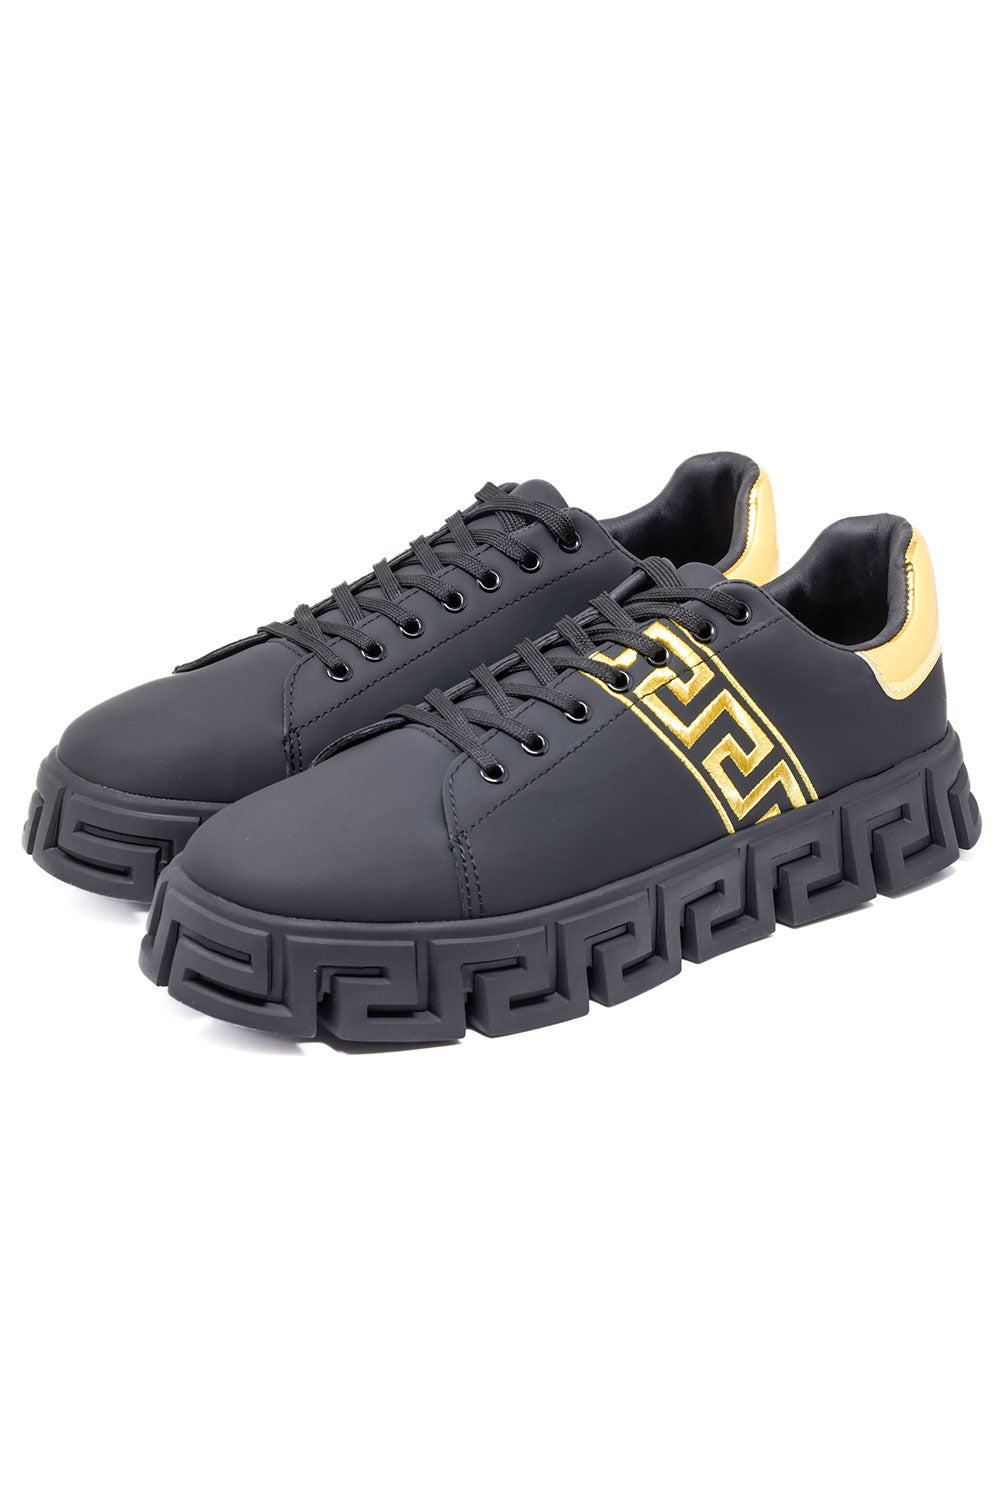 Barabas Men's Wholesale  Greek Key Sole Pattern Premium Sneakers 4SK07 Black